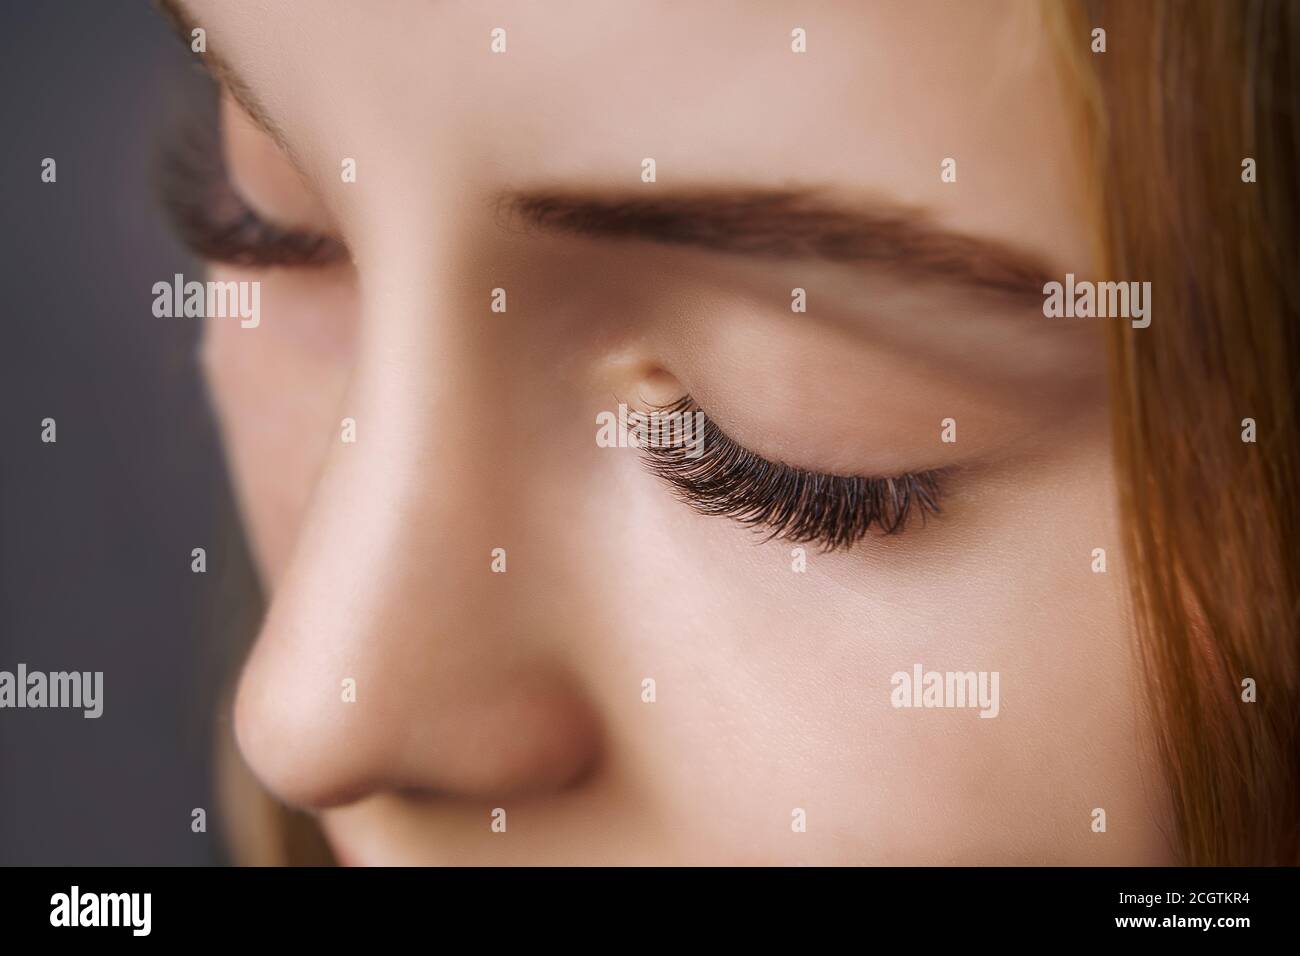 Eyelash Extension Procedure. Woman Eye with Long Eyelashes. Close up, selective focus. Stock Photo